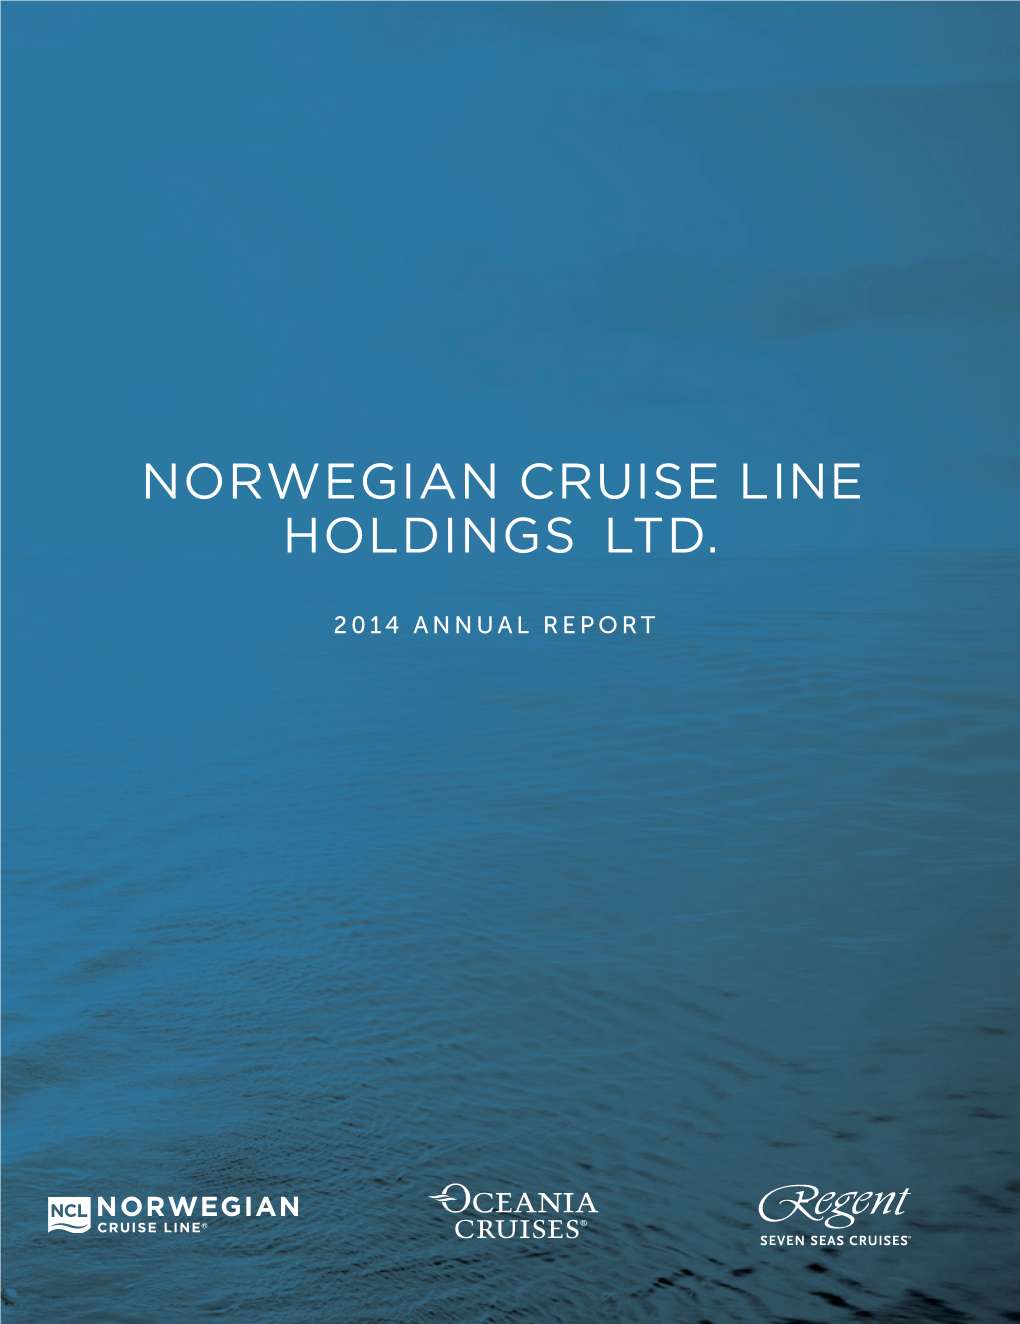 2014 ANNUAL REPORT Norwegian Cruise Line Holdings Ltd